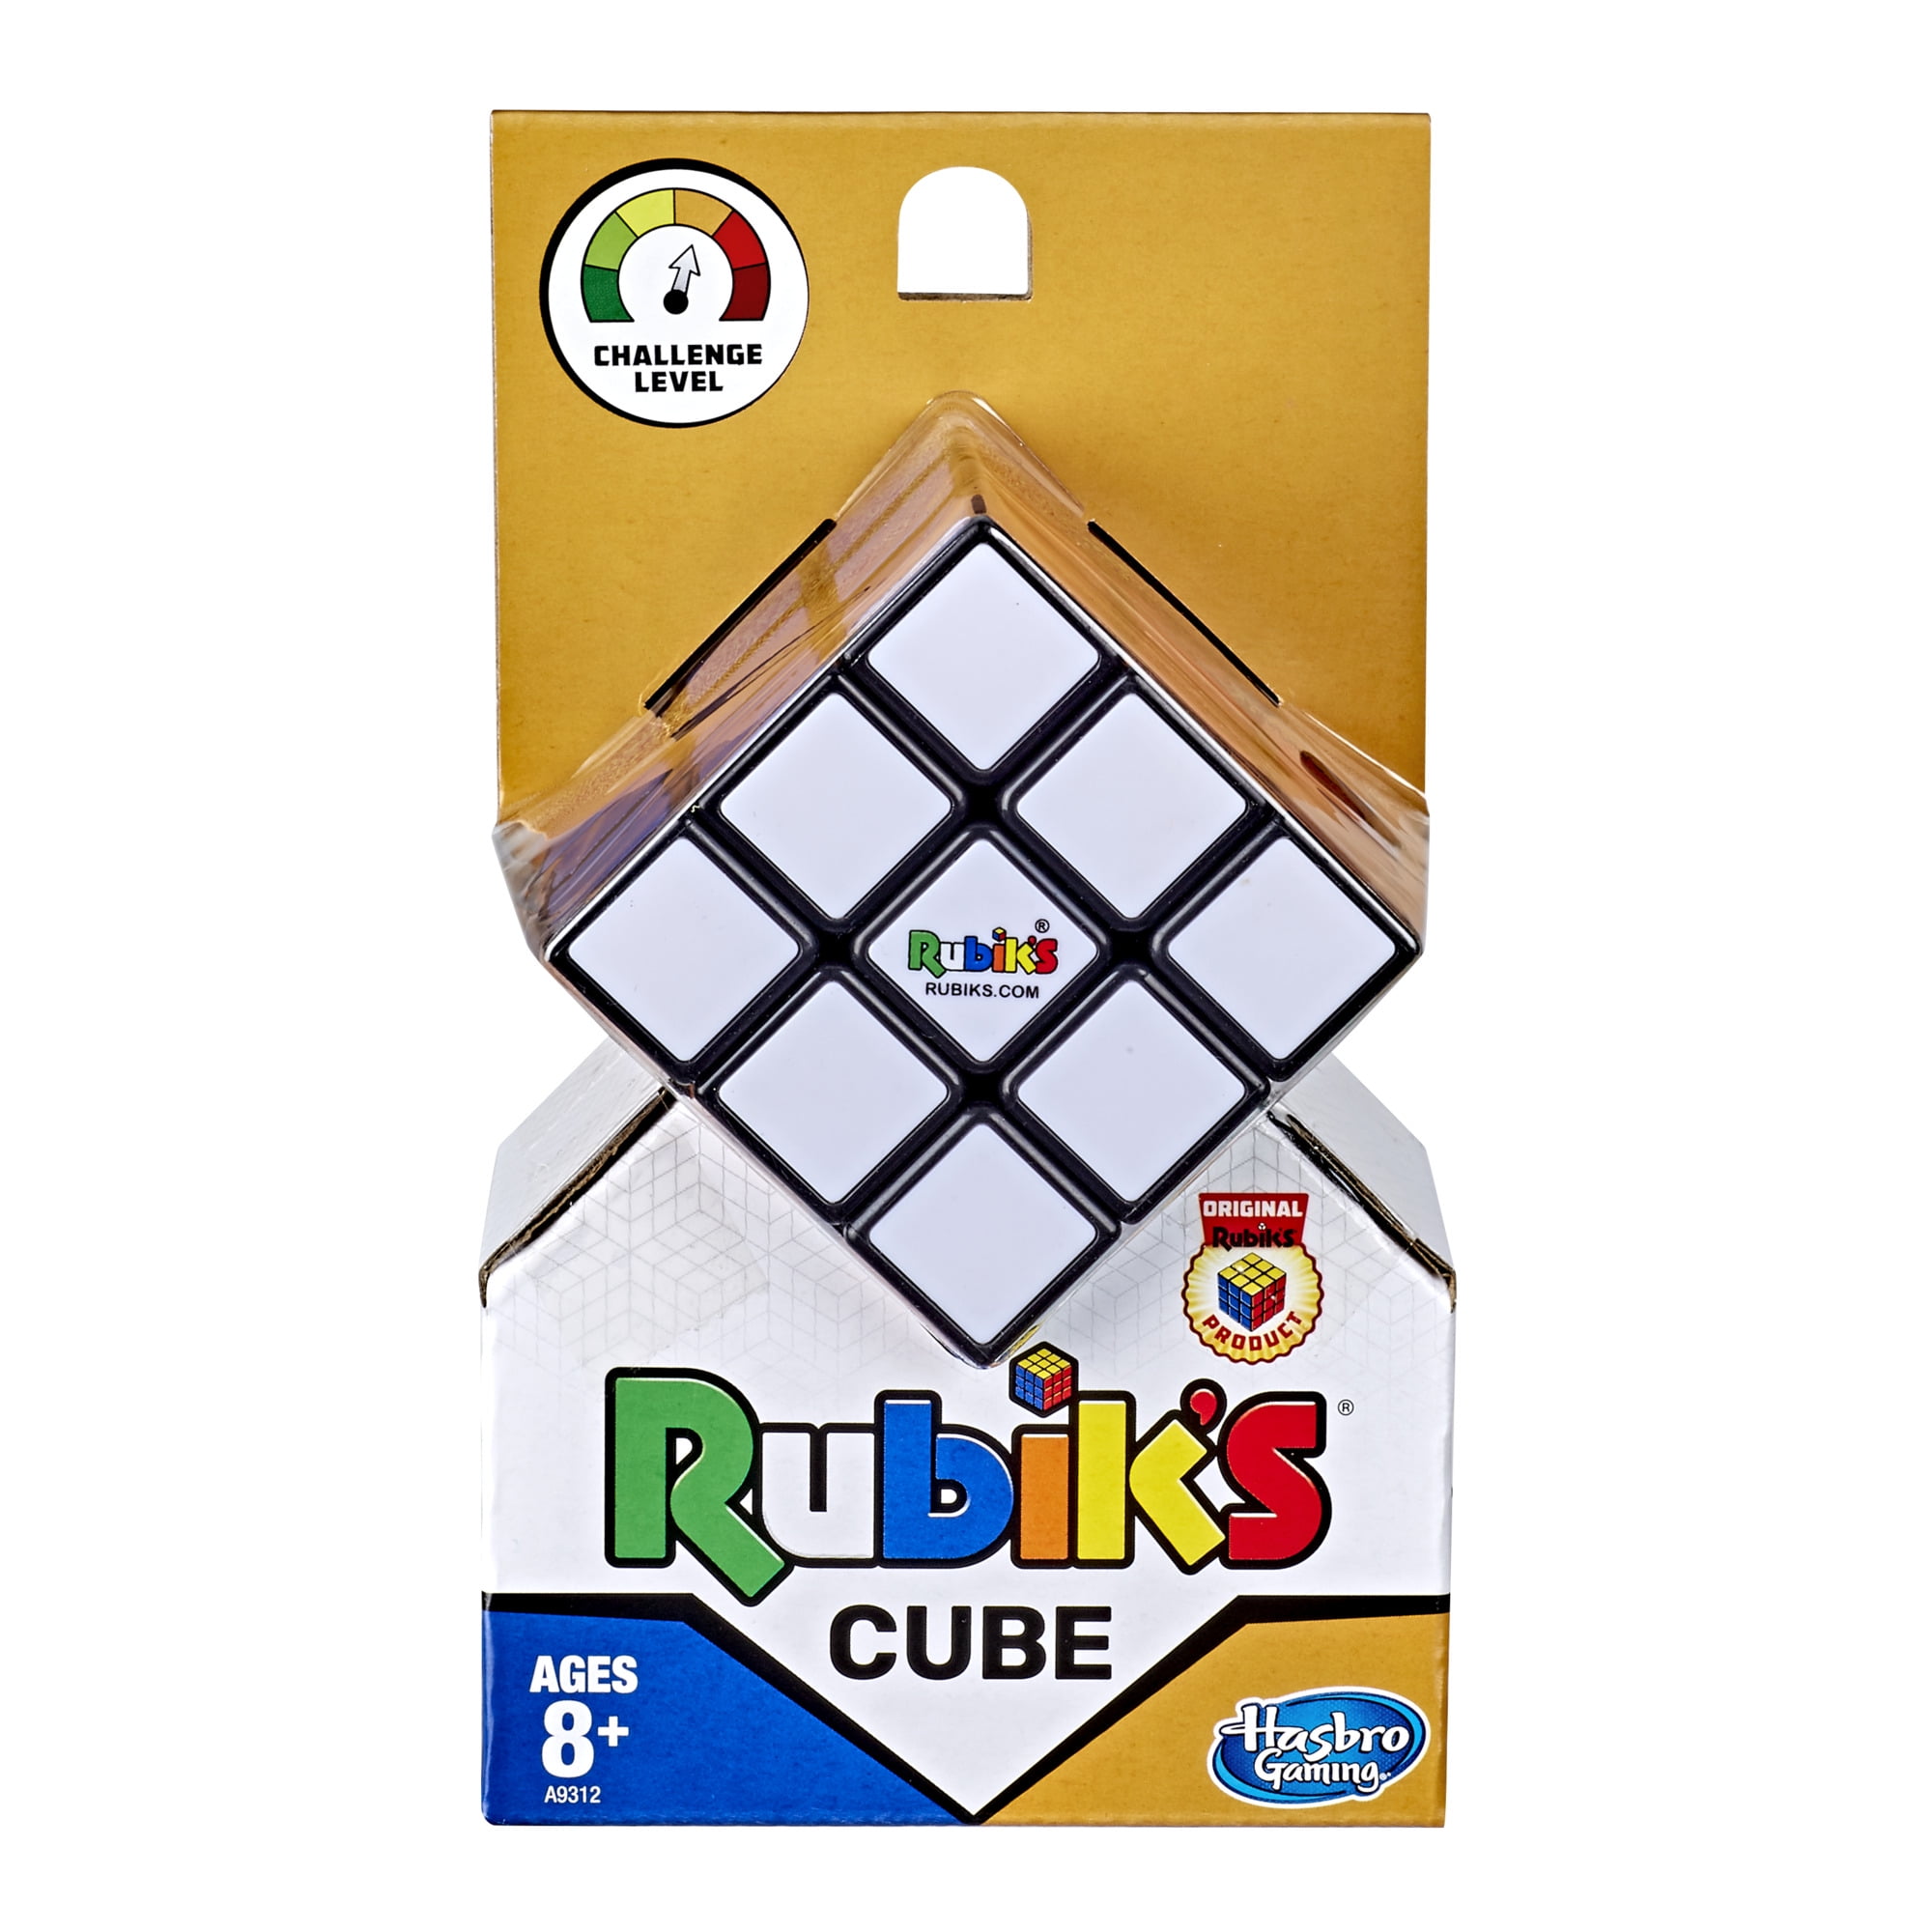 2x2 Used Original Rubik's Cube Brain Teaser Puzzle Toy Kids Best Seller 